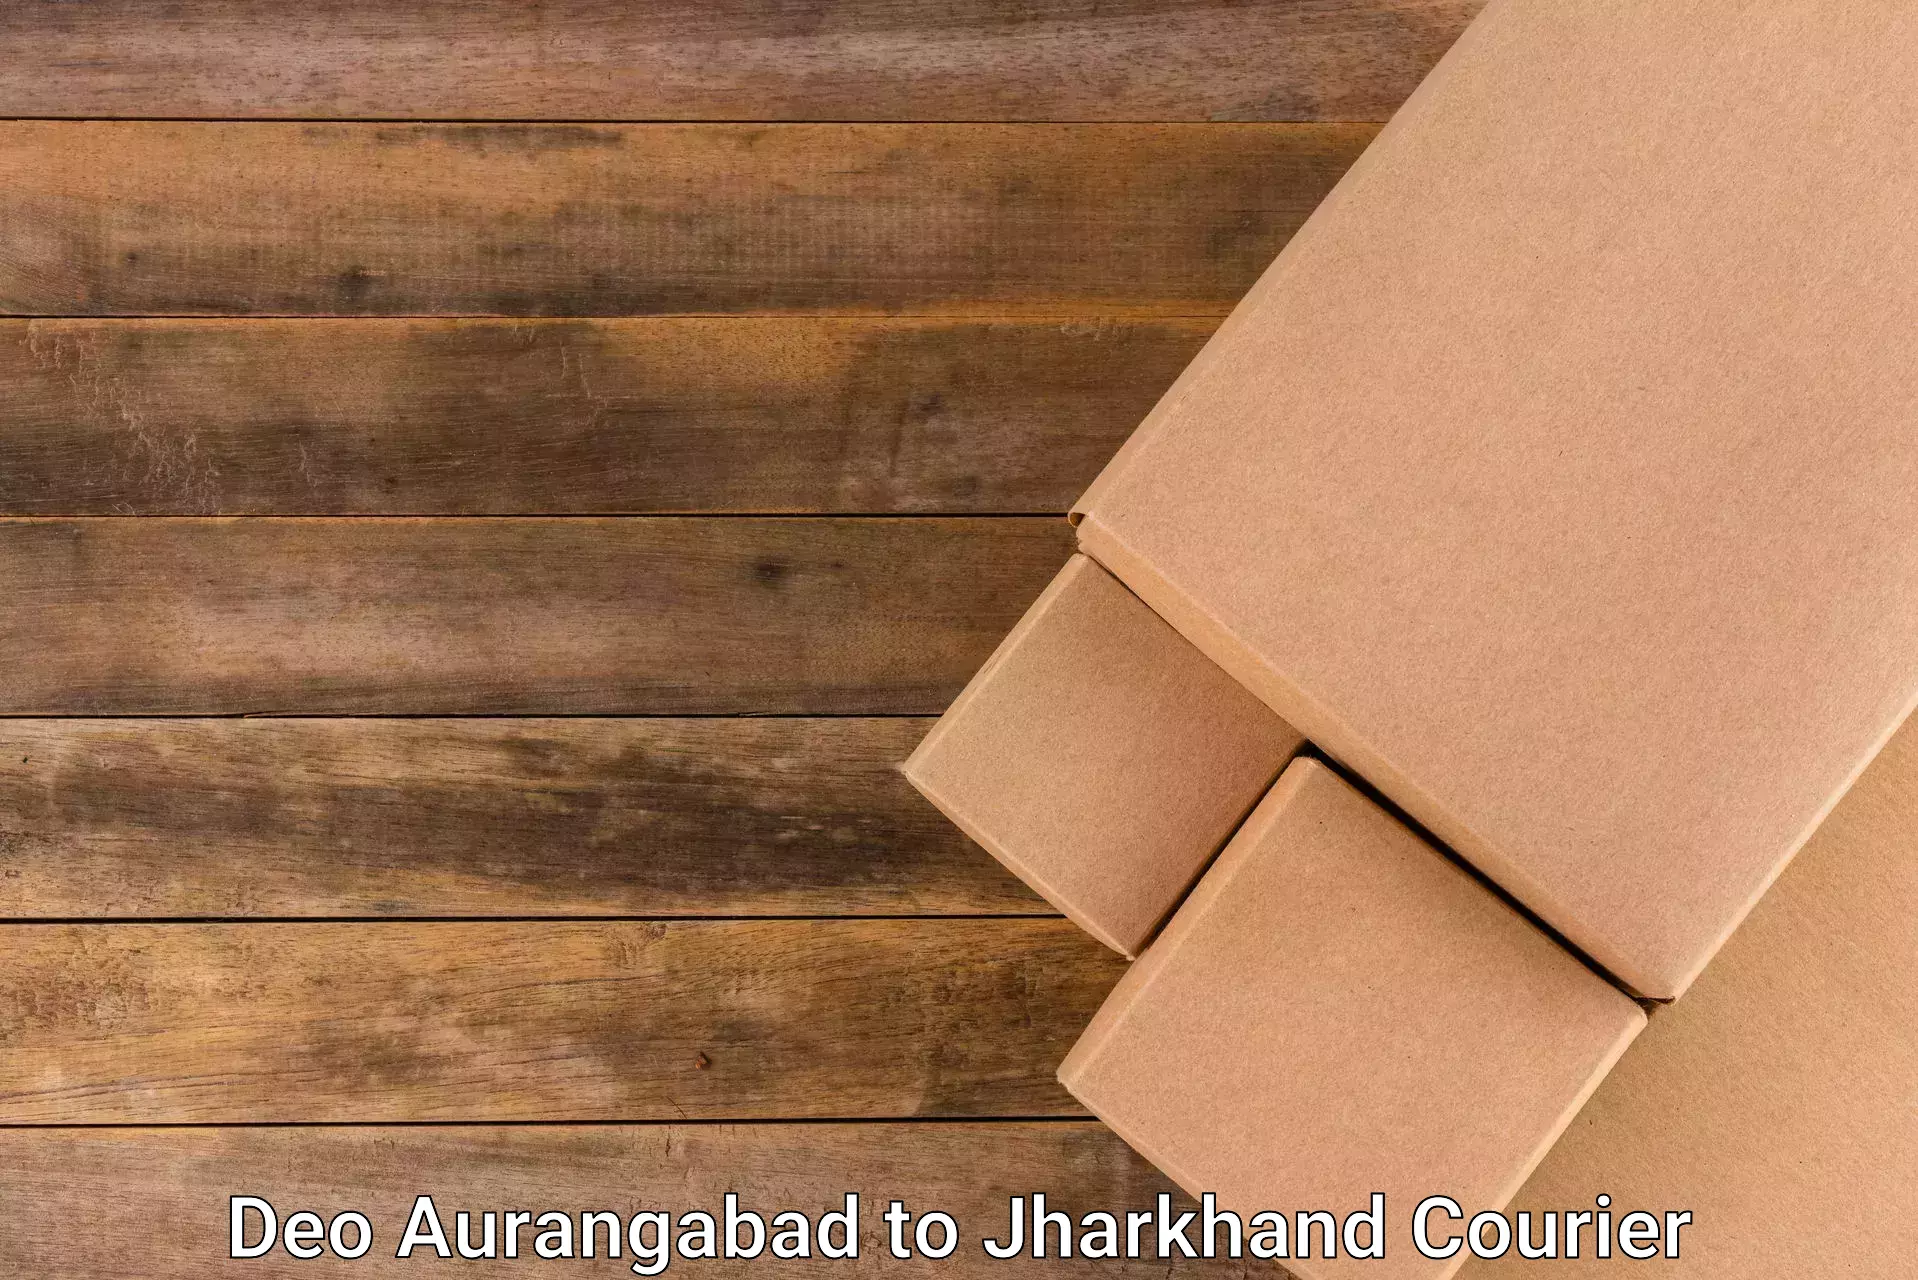 Affordable international shipping Deo Aurangabad to Jamshedpur